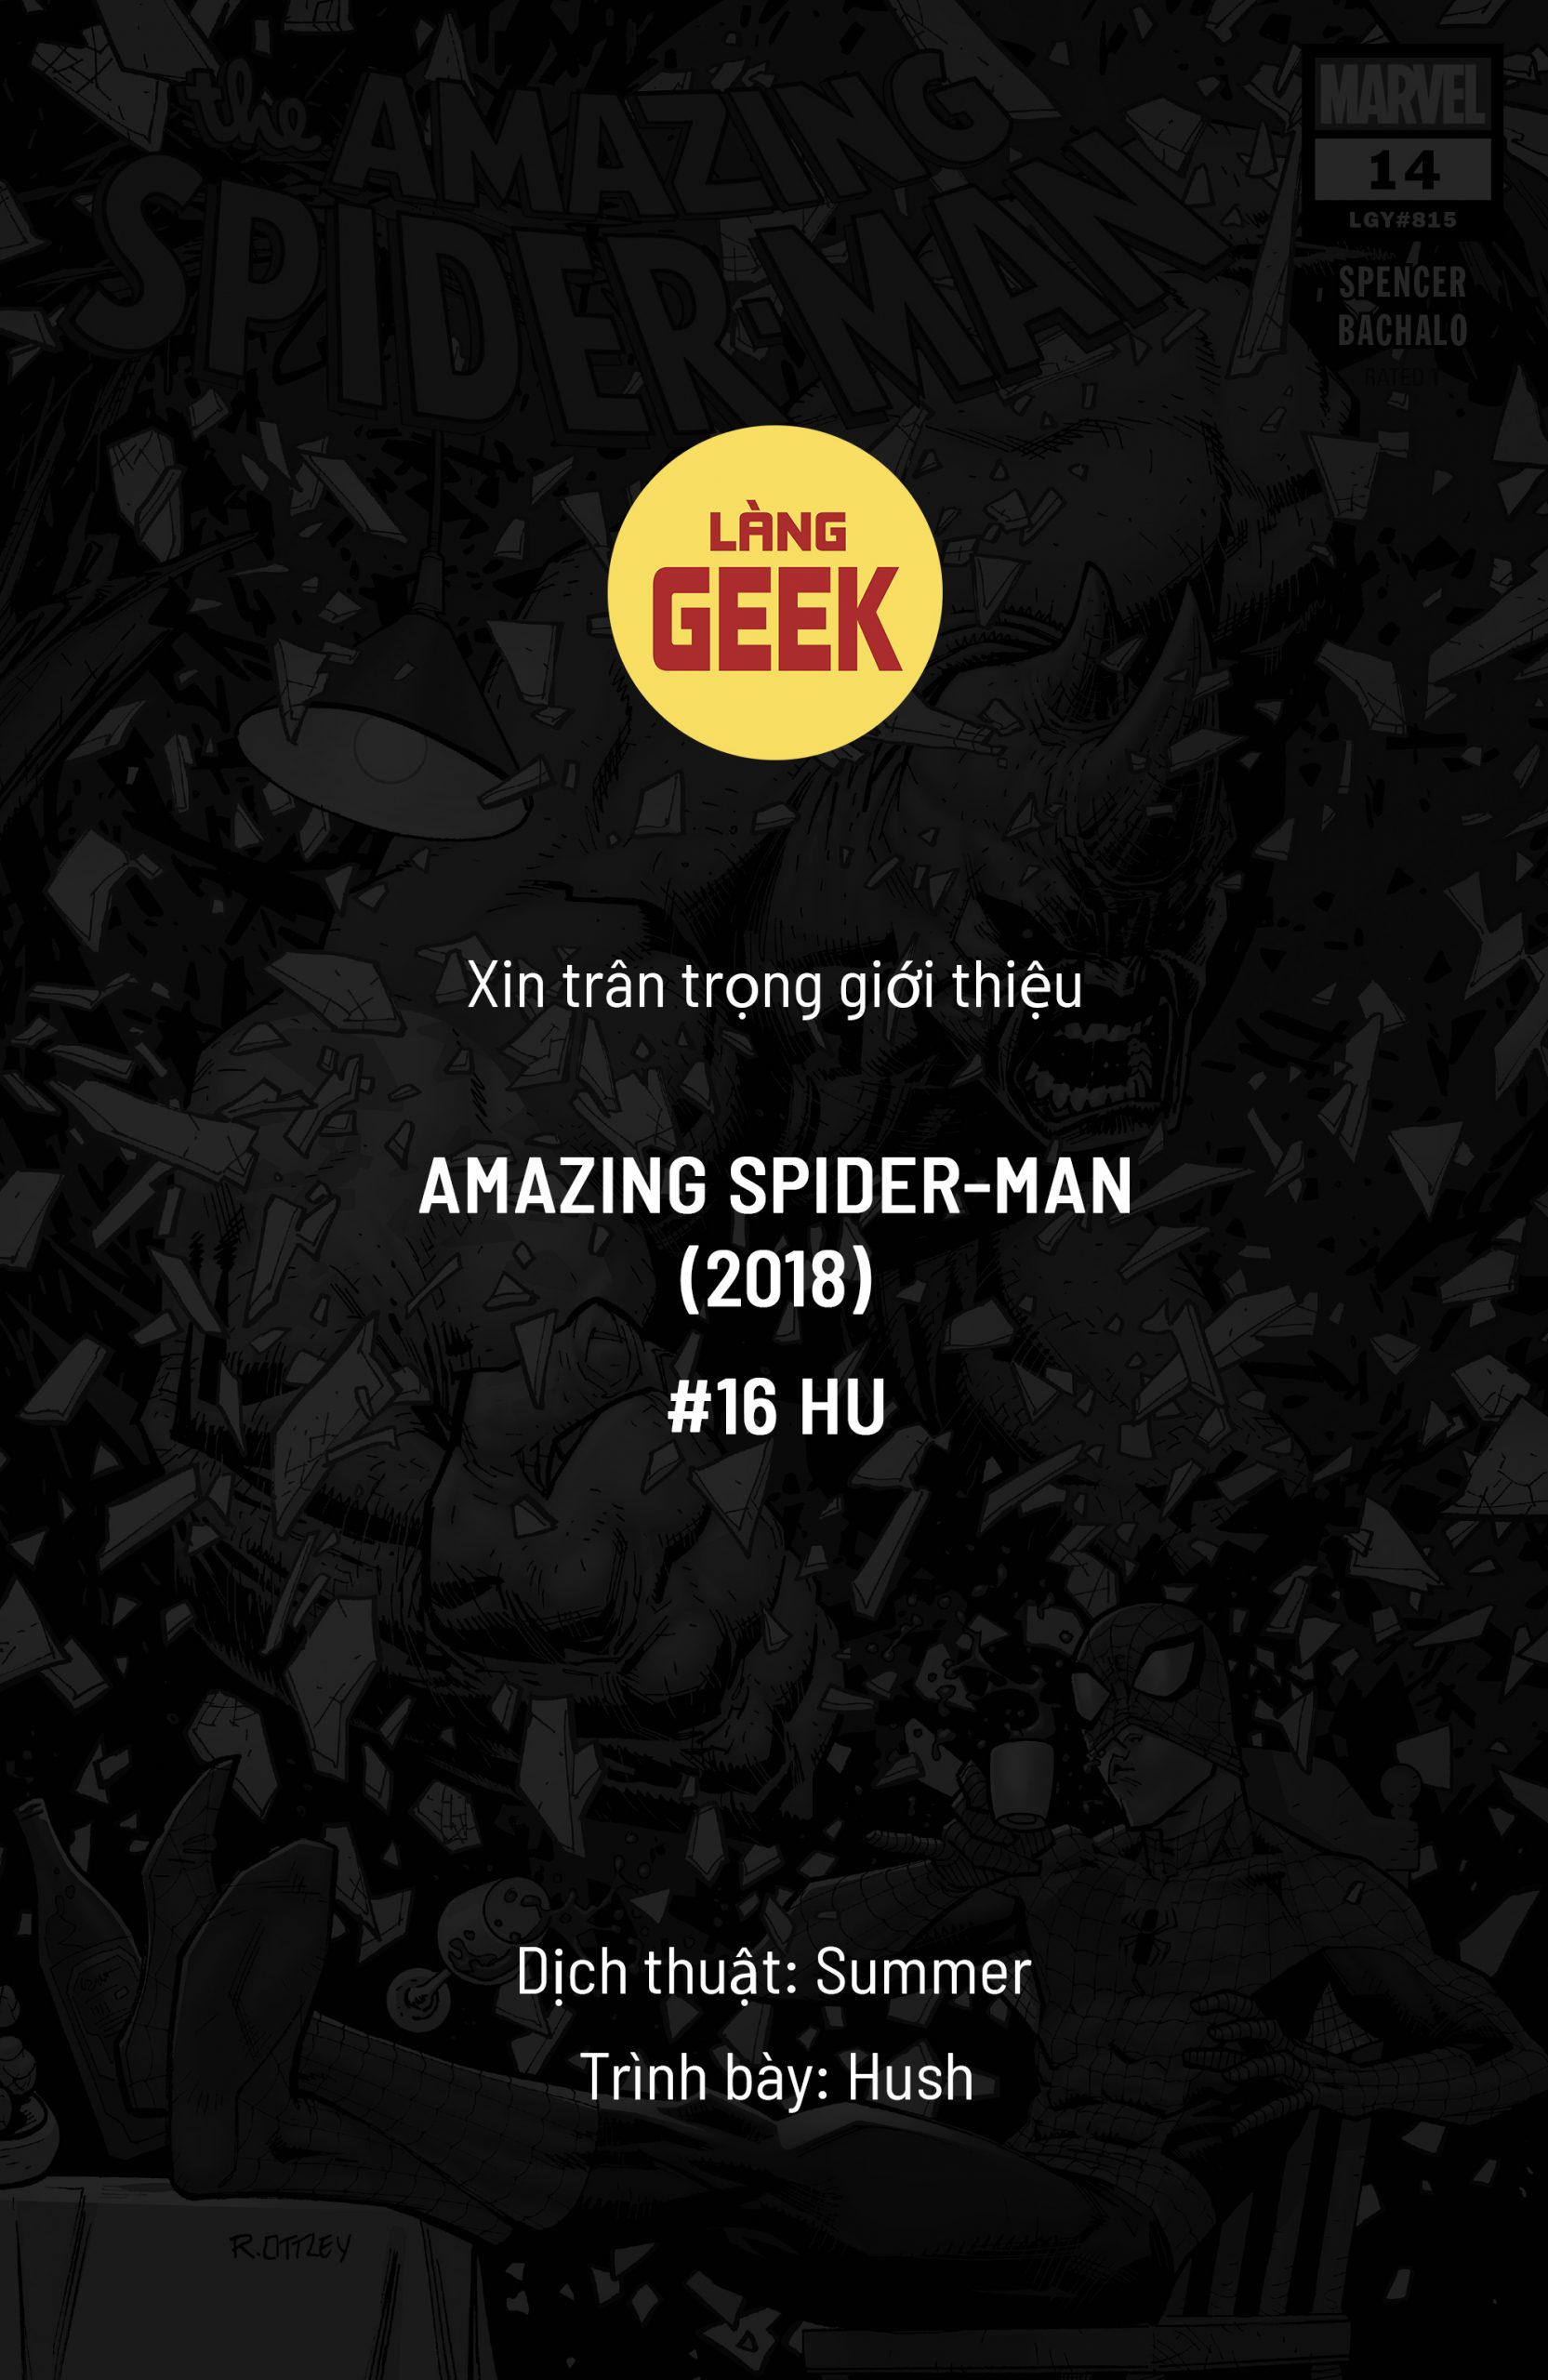 https://langgeek.net/wp-content/uploads/2022/01/Amazing-Spider-Man-016.HU-00-scaled.jpg